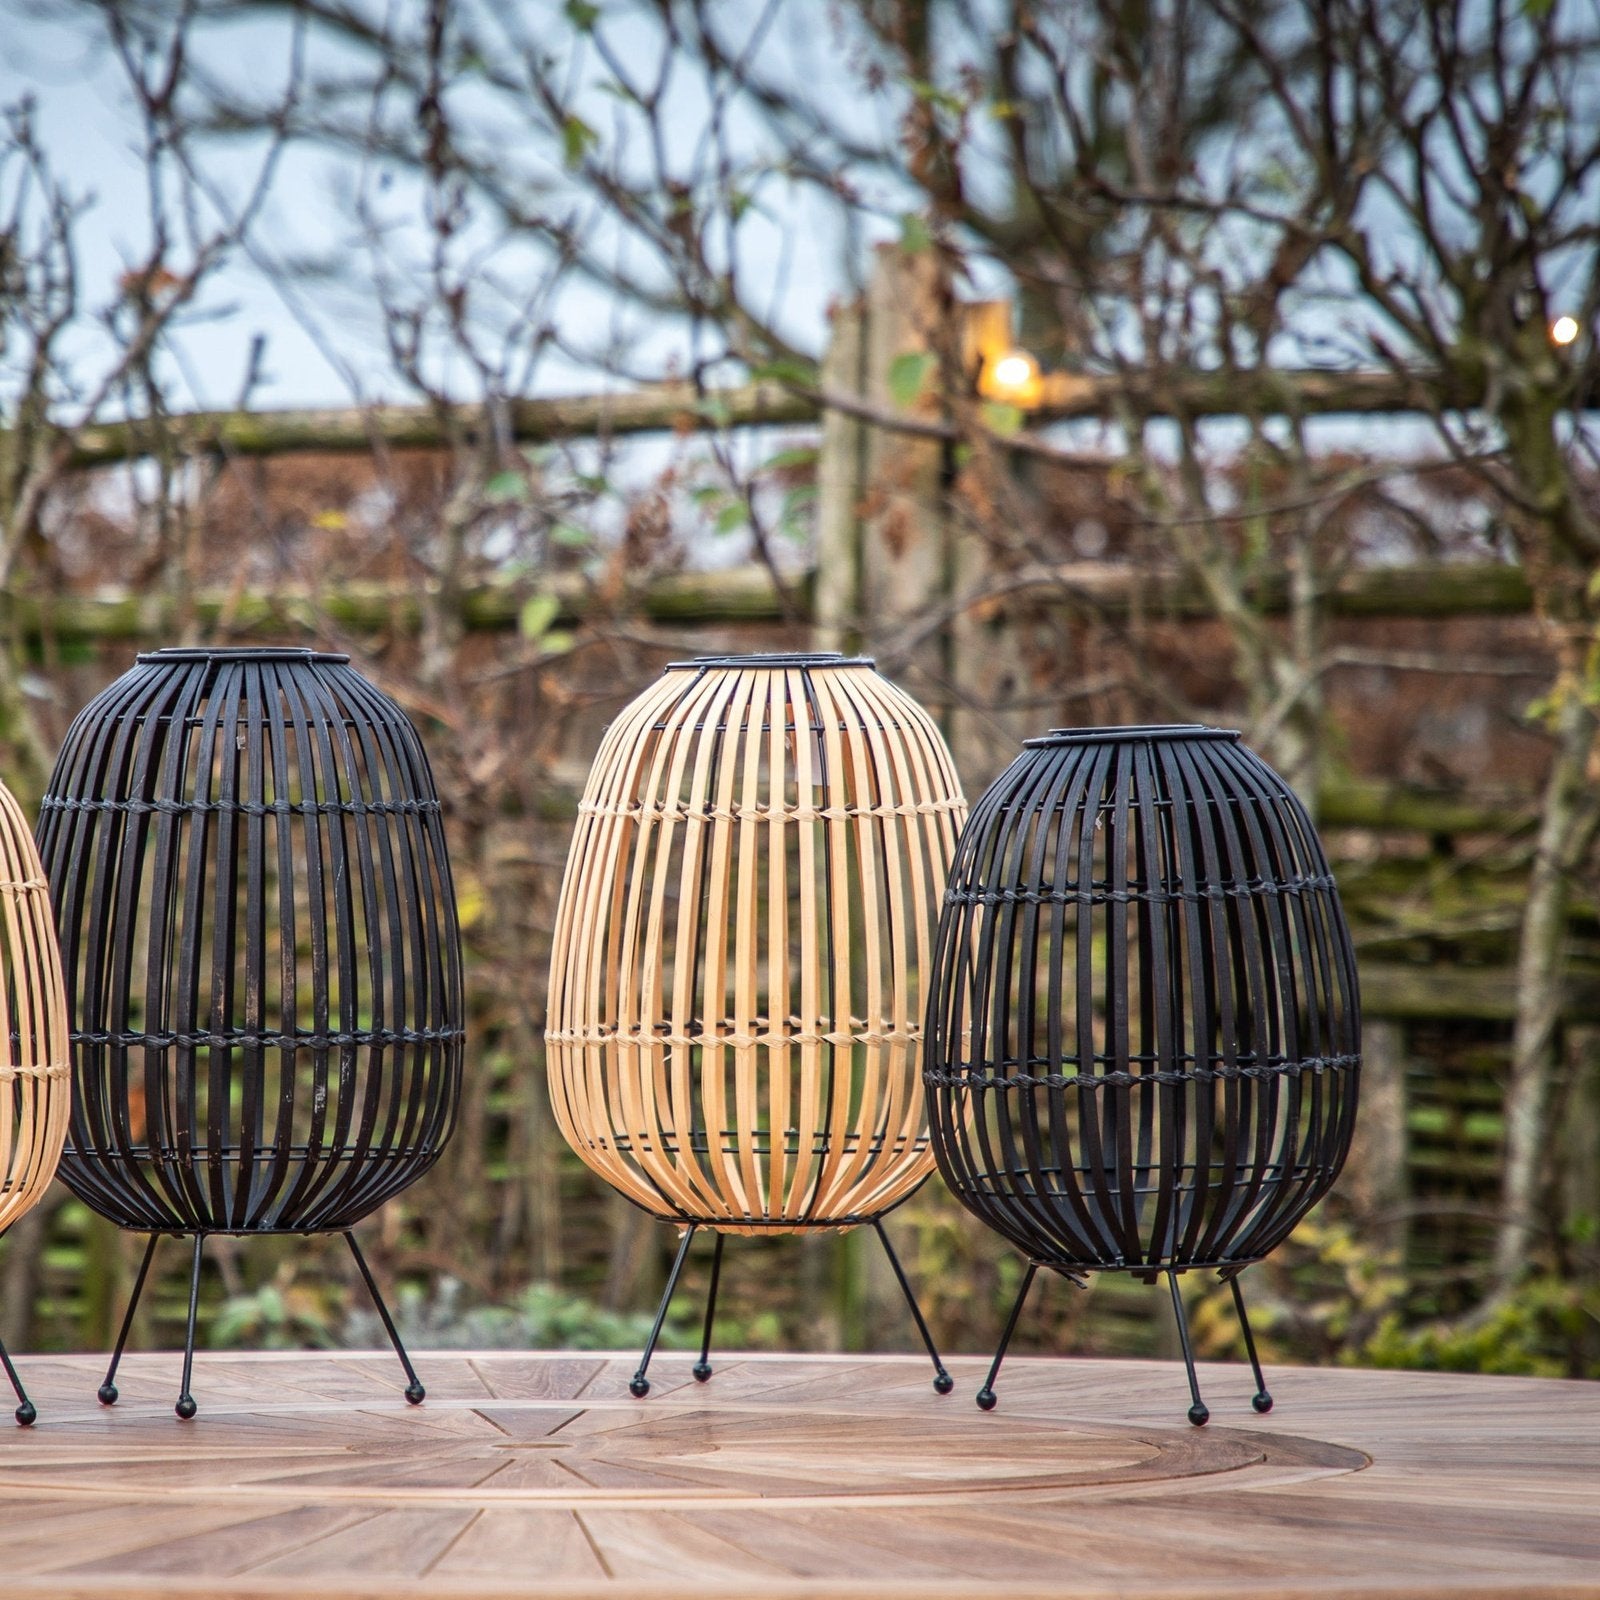 Folklore Solar LED Lantern - Handmade Bamboo Lantern - Ambient Garden Lighting